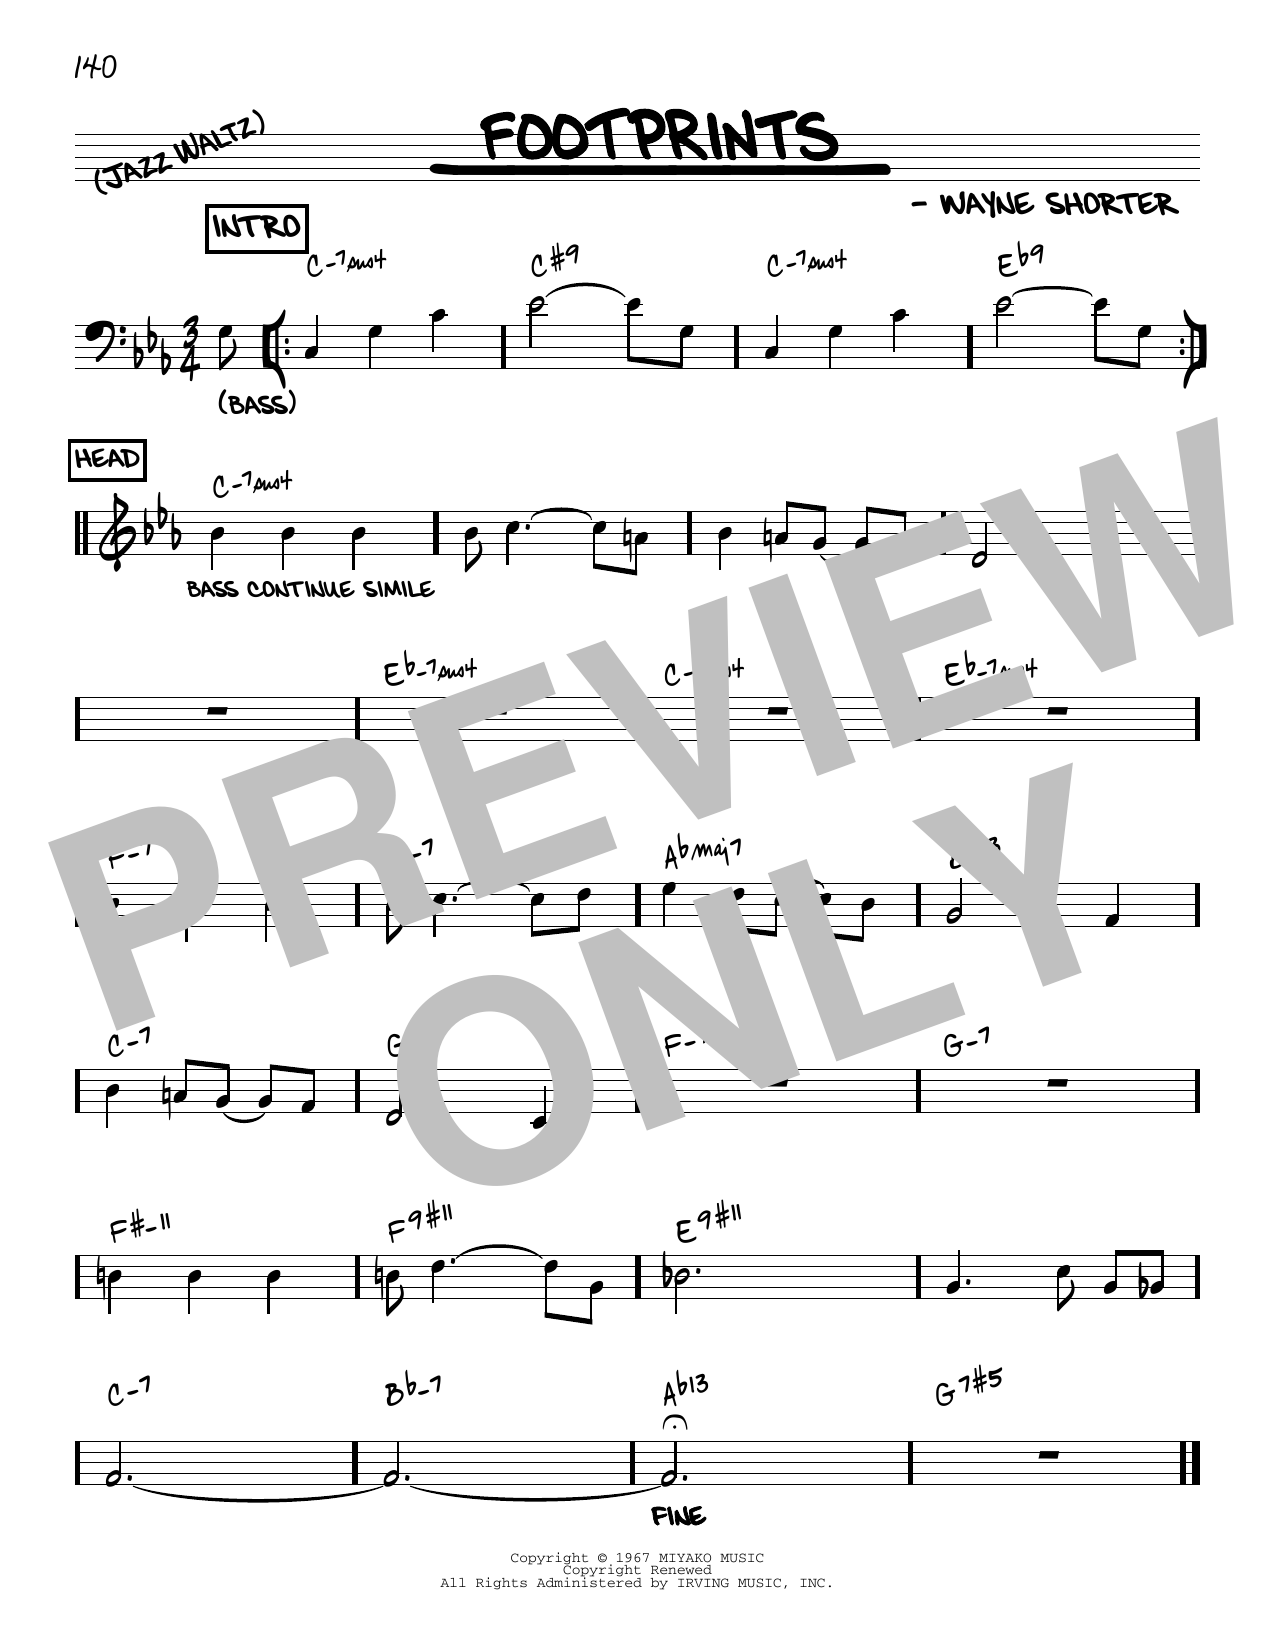 Wayne Shorter Footprints [Reharmonized version] (arr. Jack Grassel) Sheet Music Notes & Chords for Real Book – Melody & Chords - Download or Print PDF